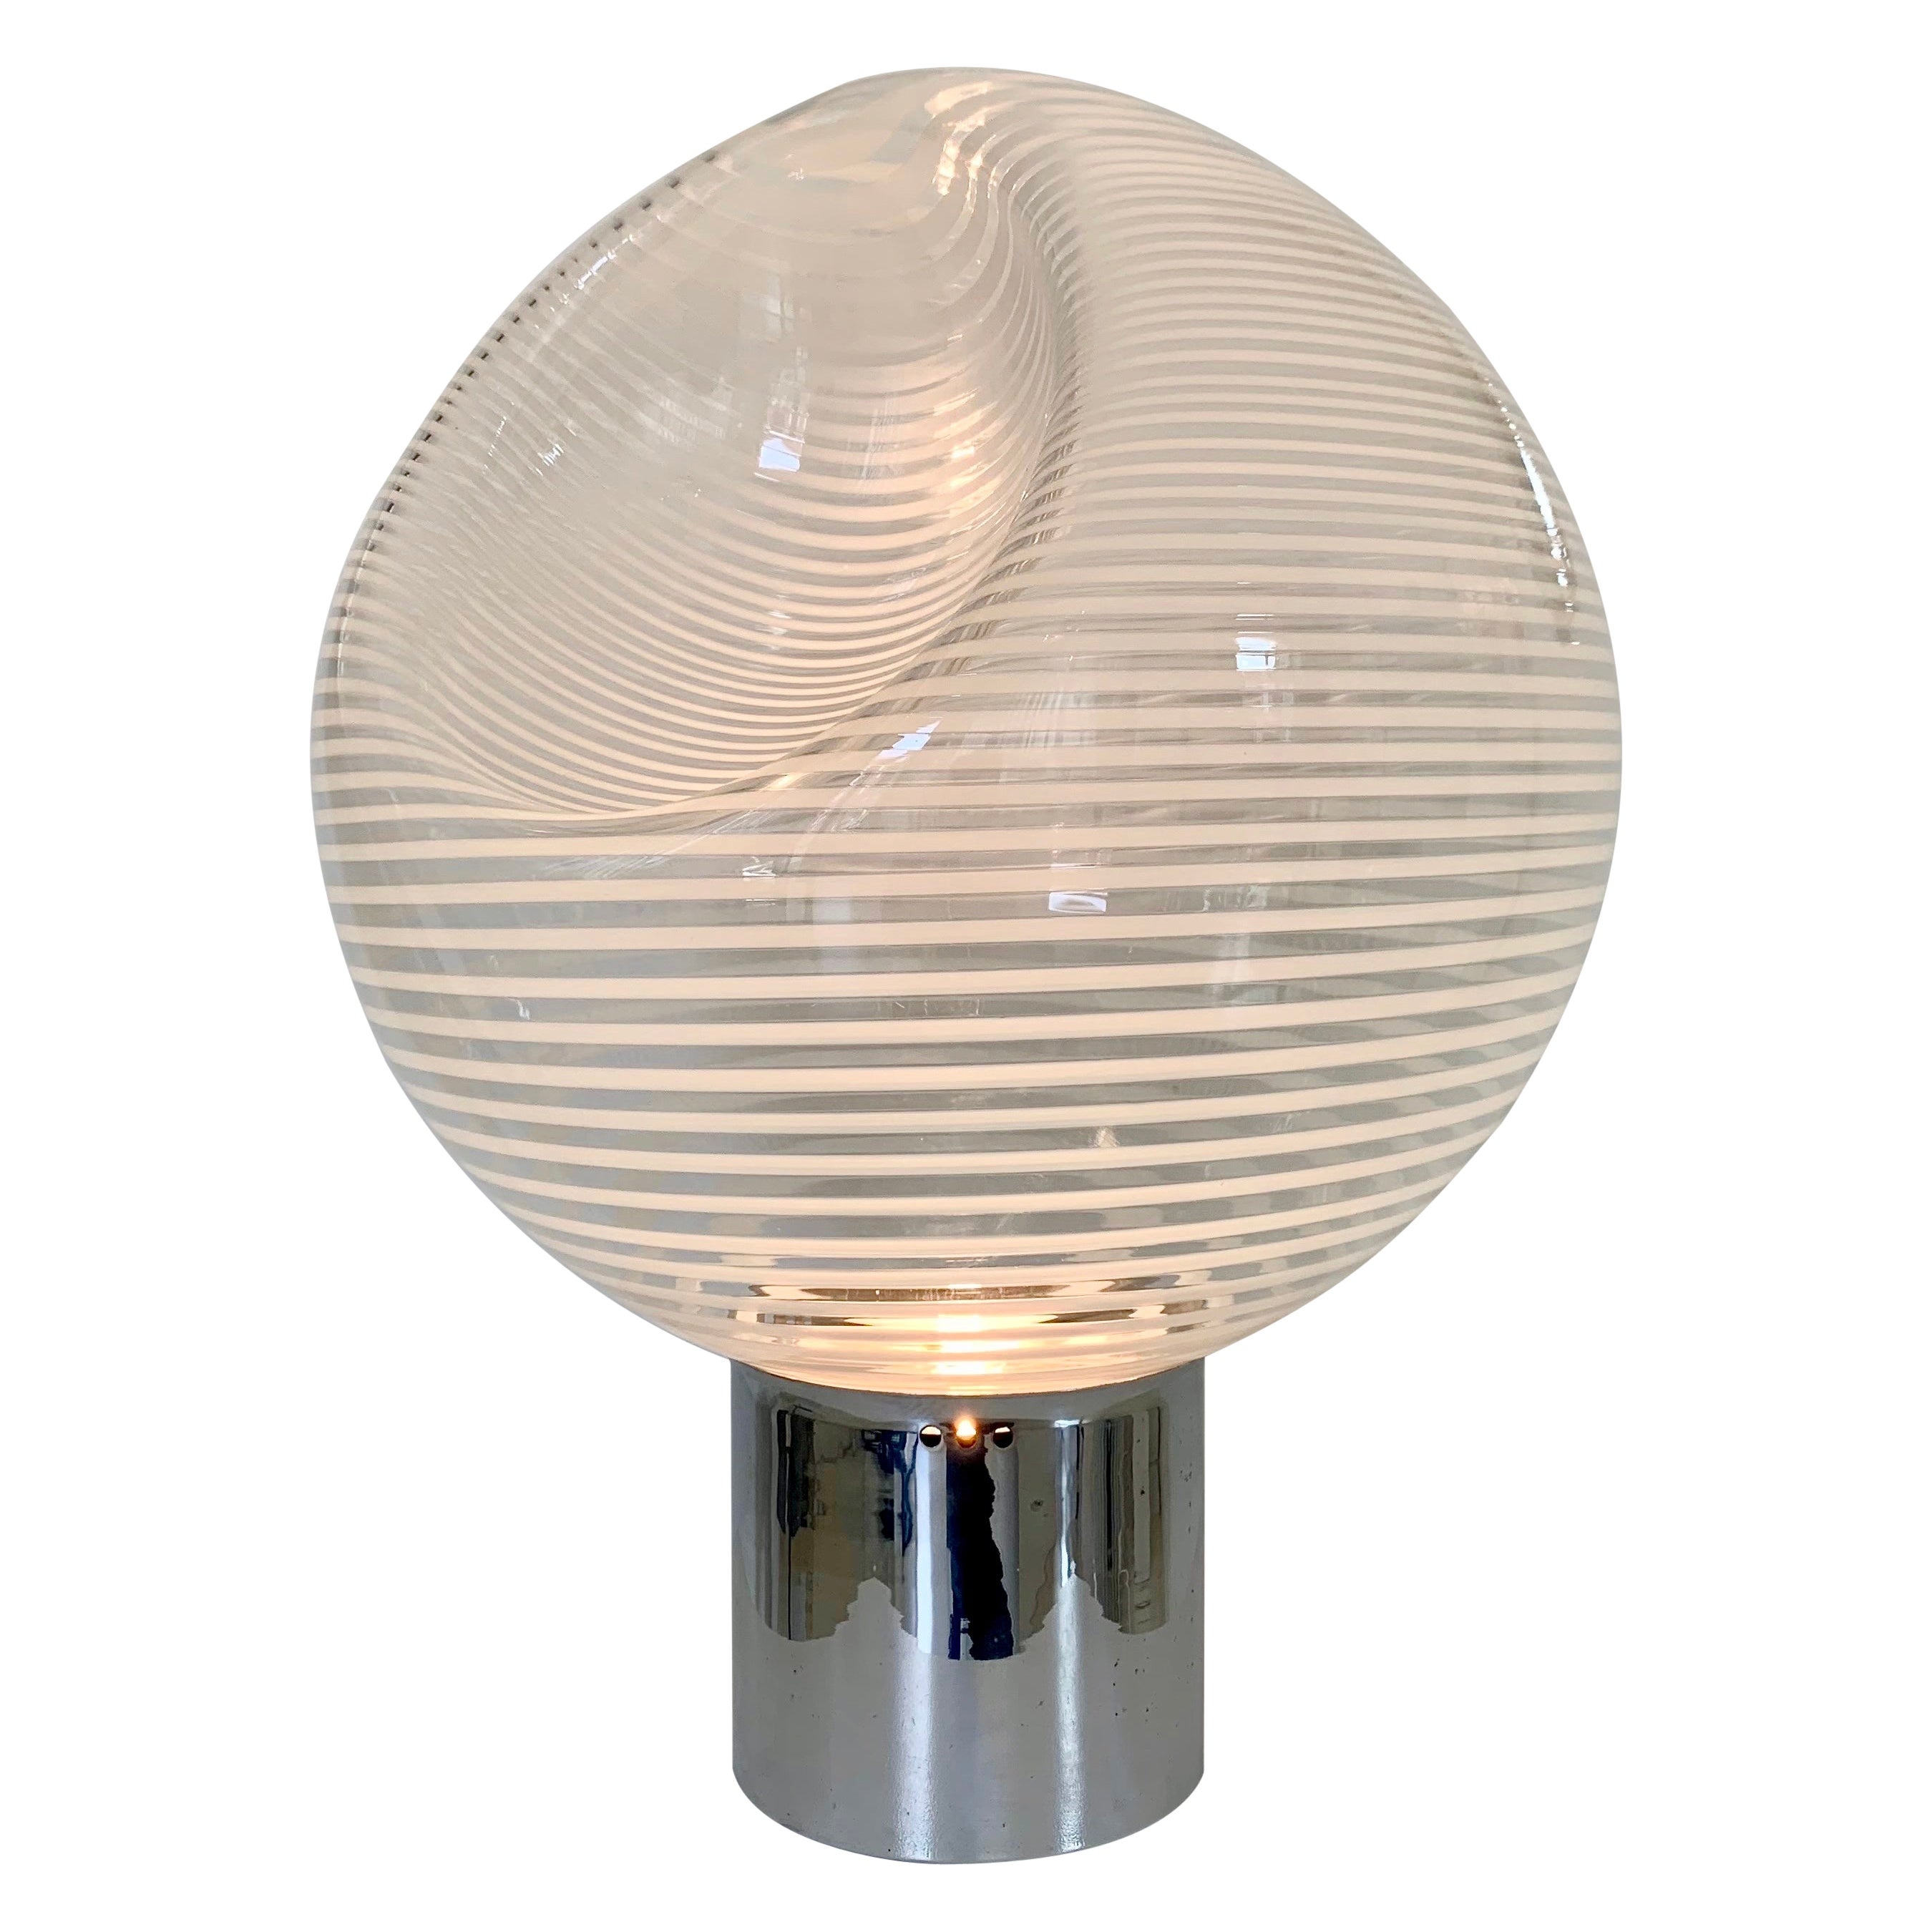 Vistosi Glass Table Lamp, Corba model, circa 1960, Italy.